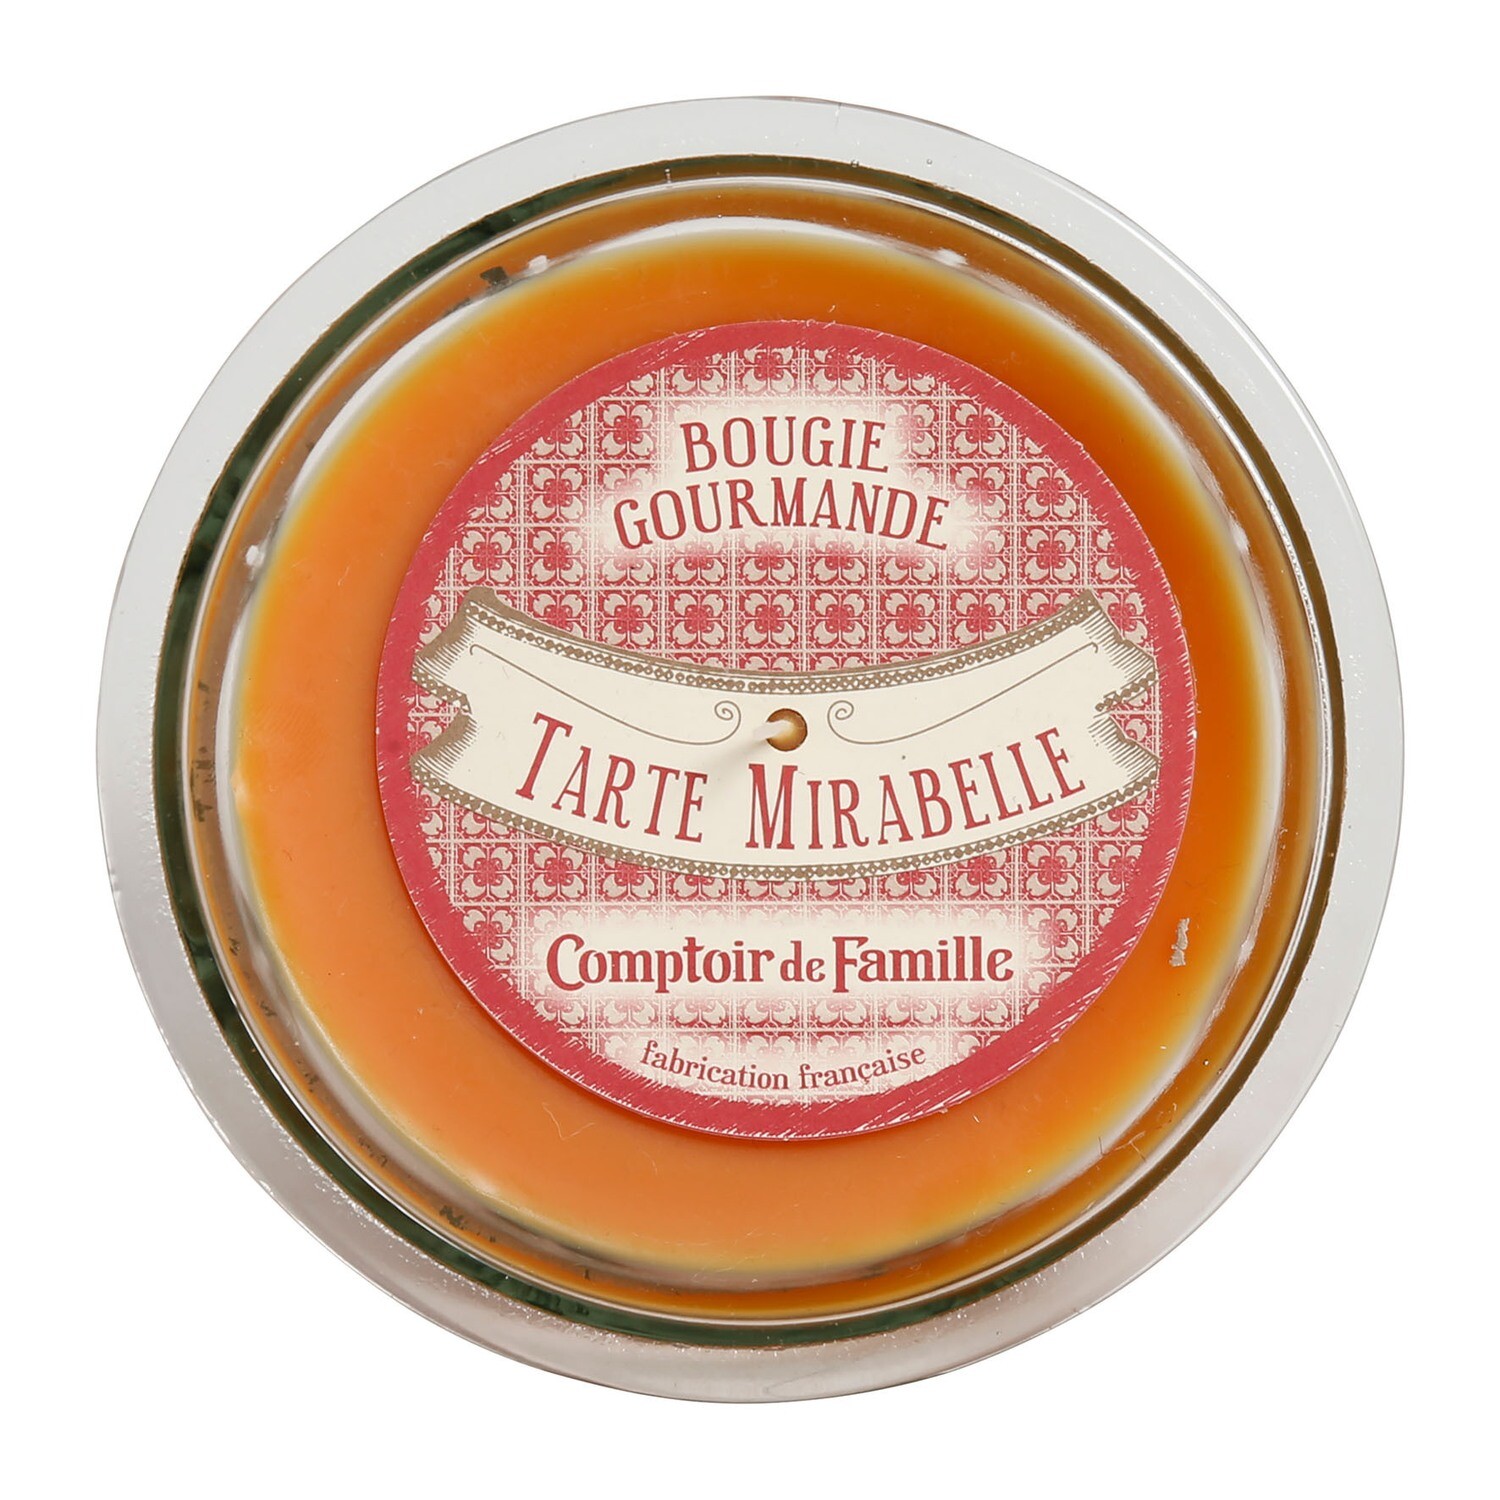 Bougie Gourmande - Tarte mirabelle